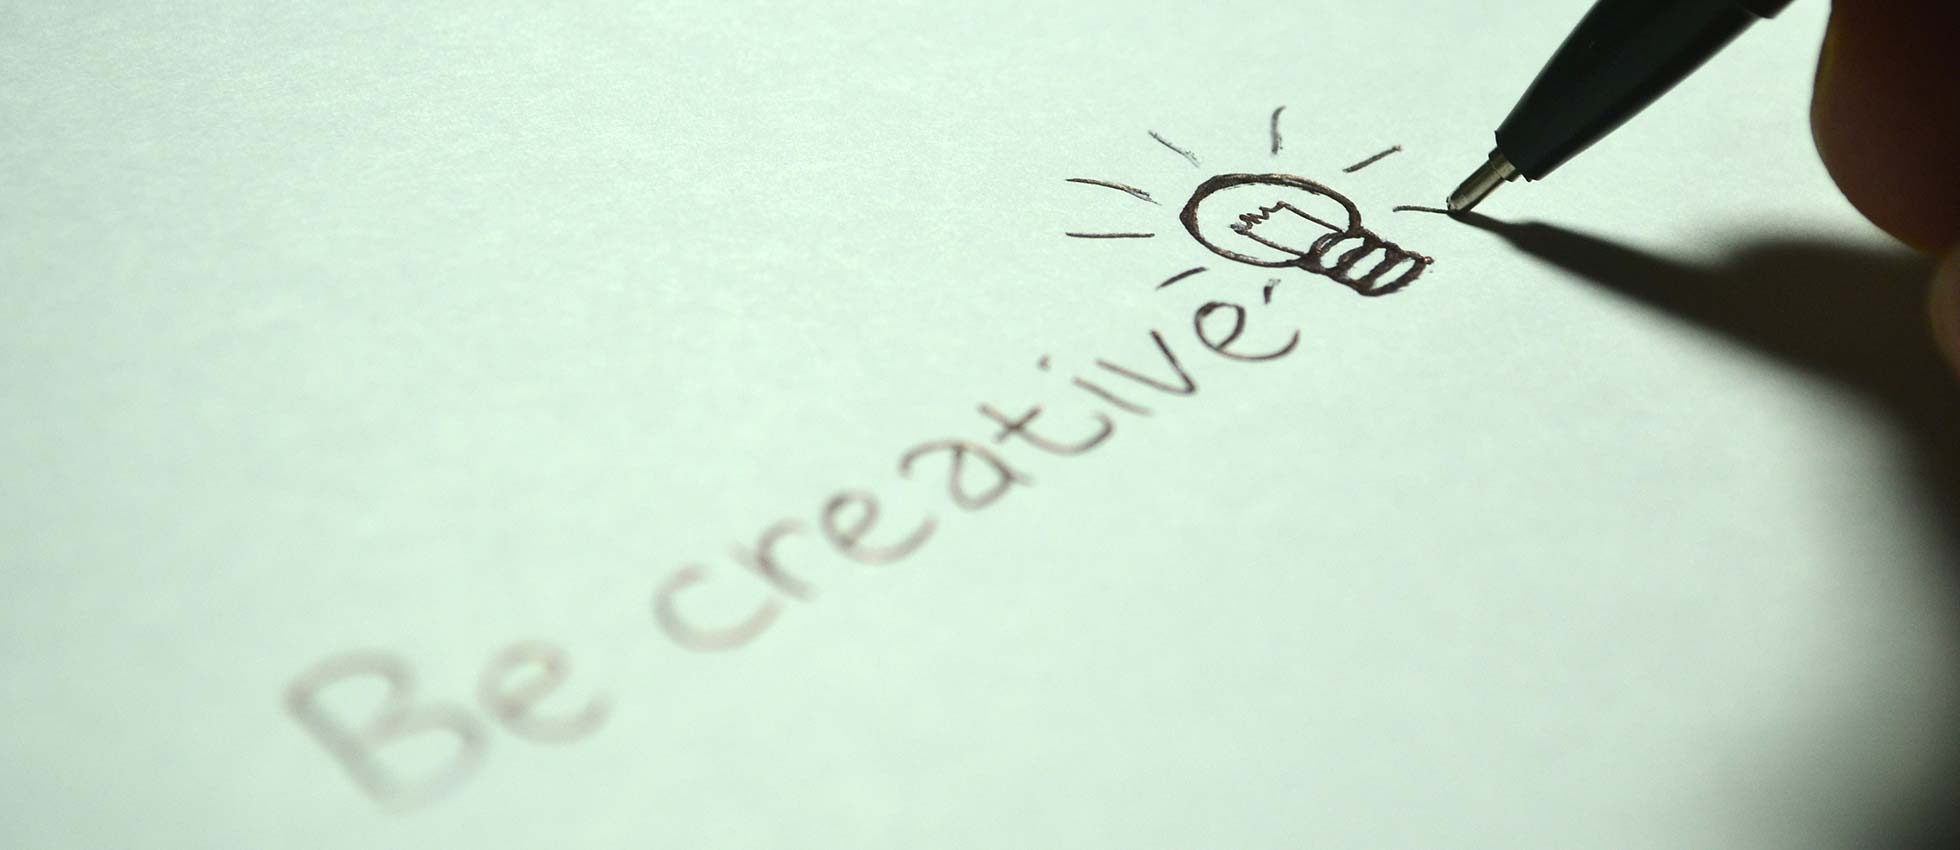 15 Frases de Creatividad que te ayudarán a desbloquear tu mente